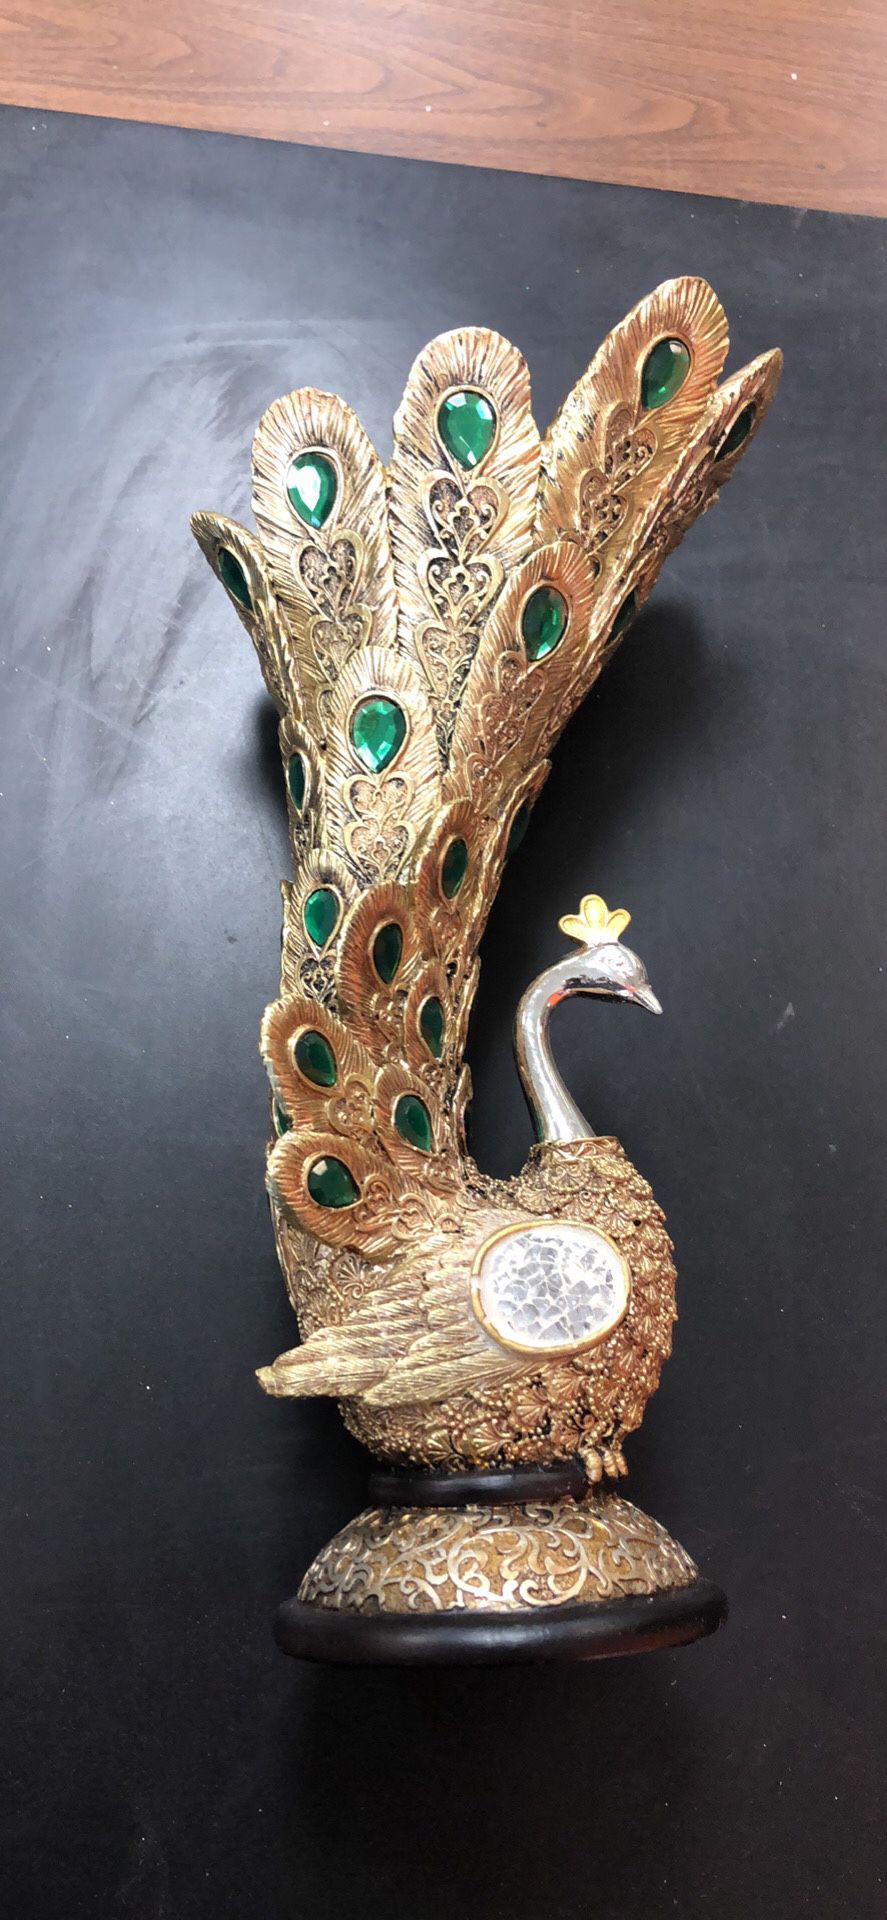 Peacock decorative vase